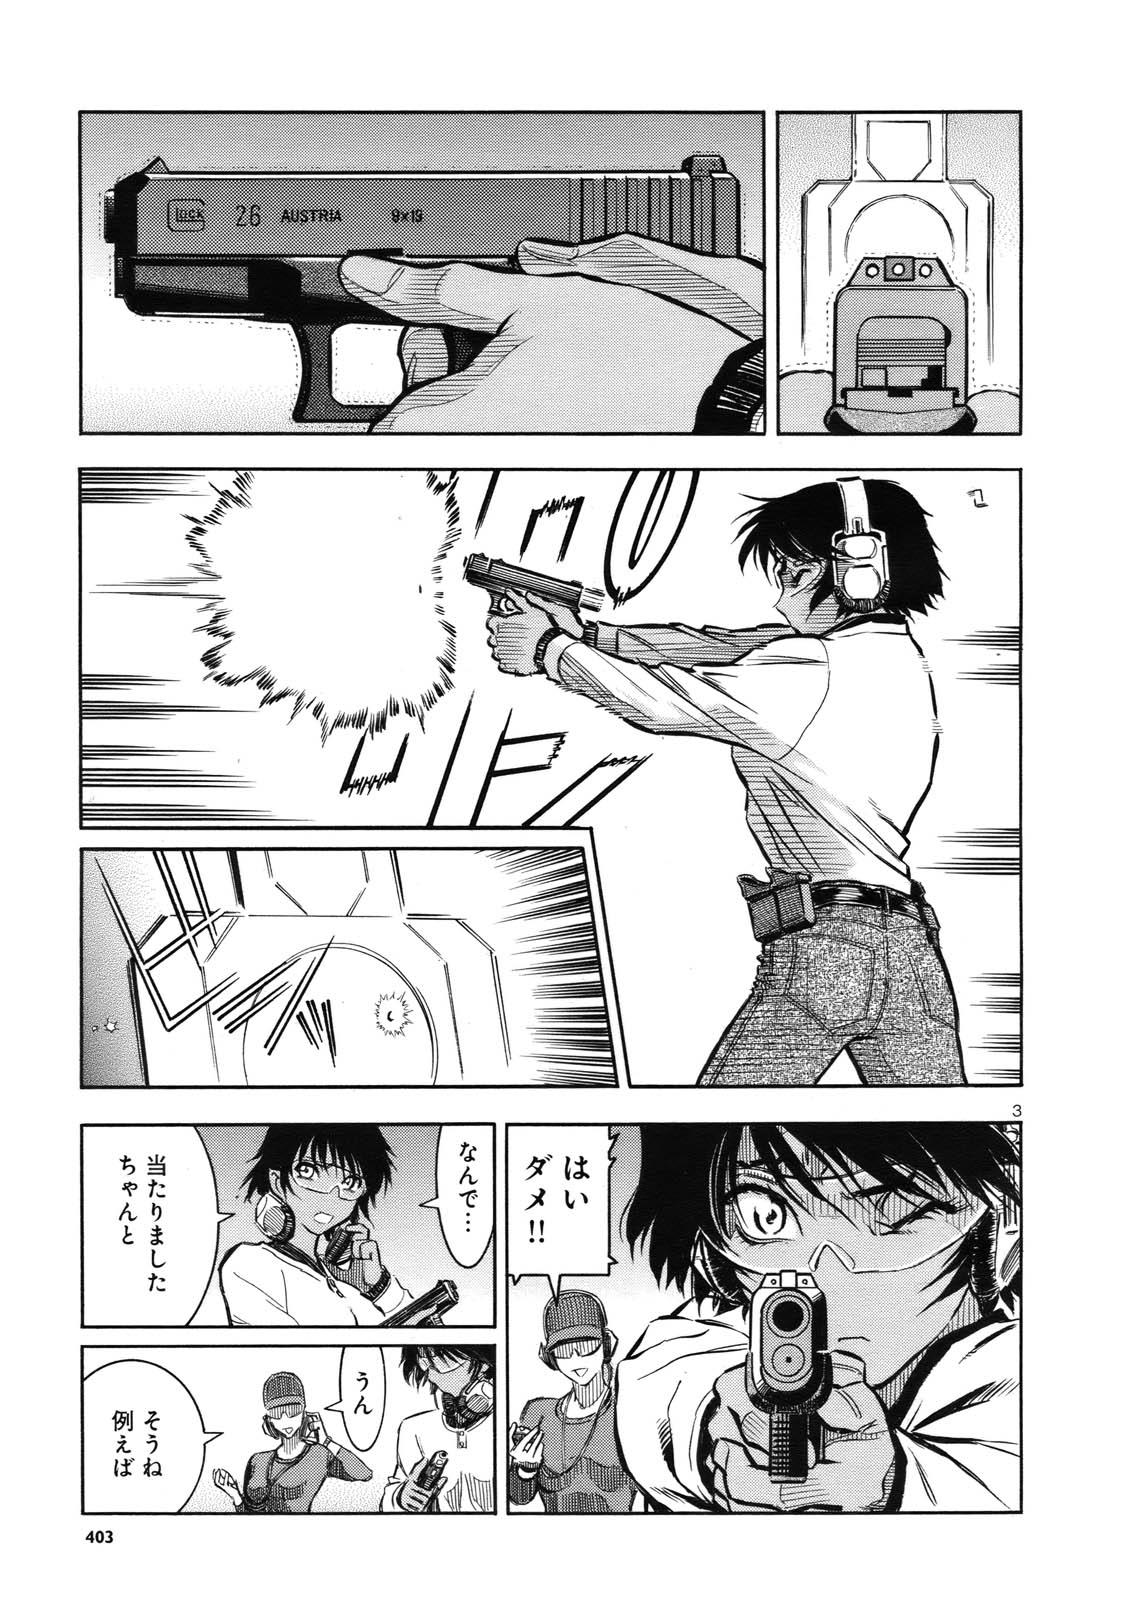 Oldman rapid fire Anime - Page 4